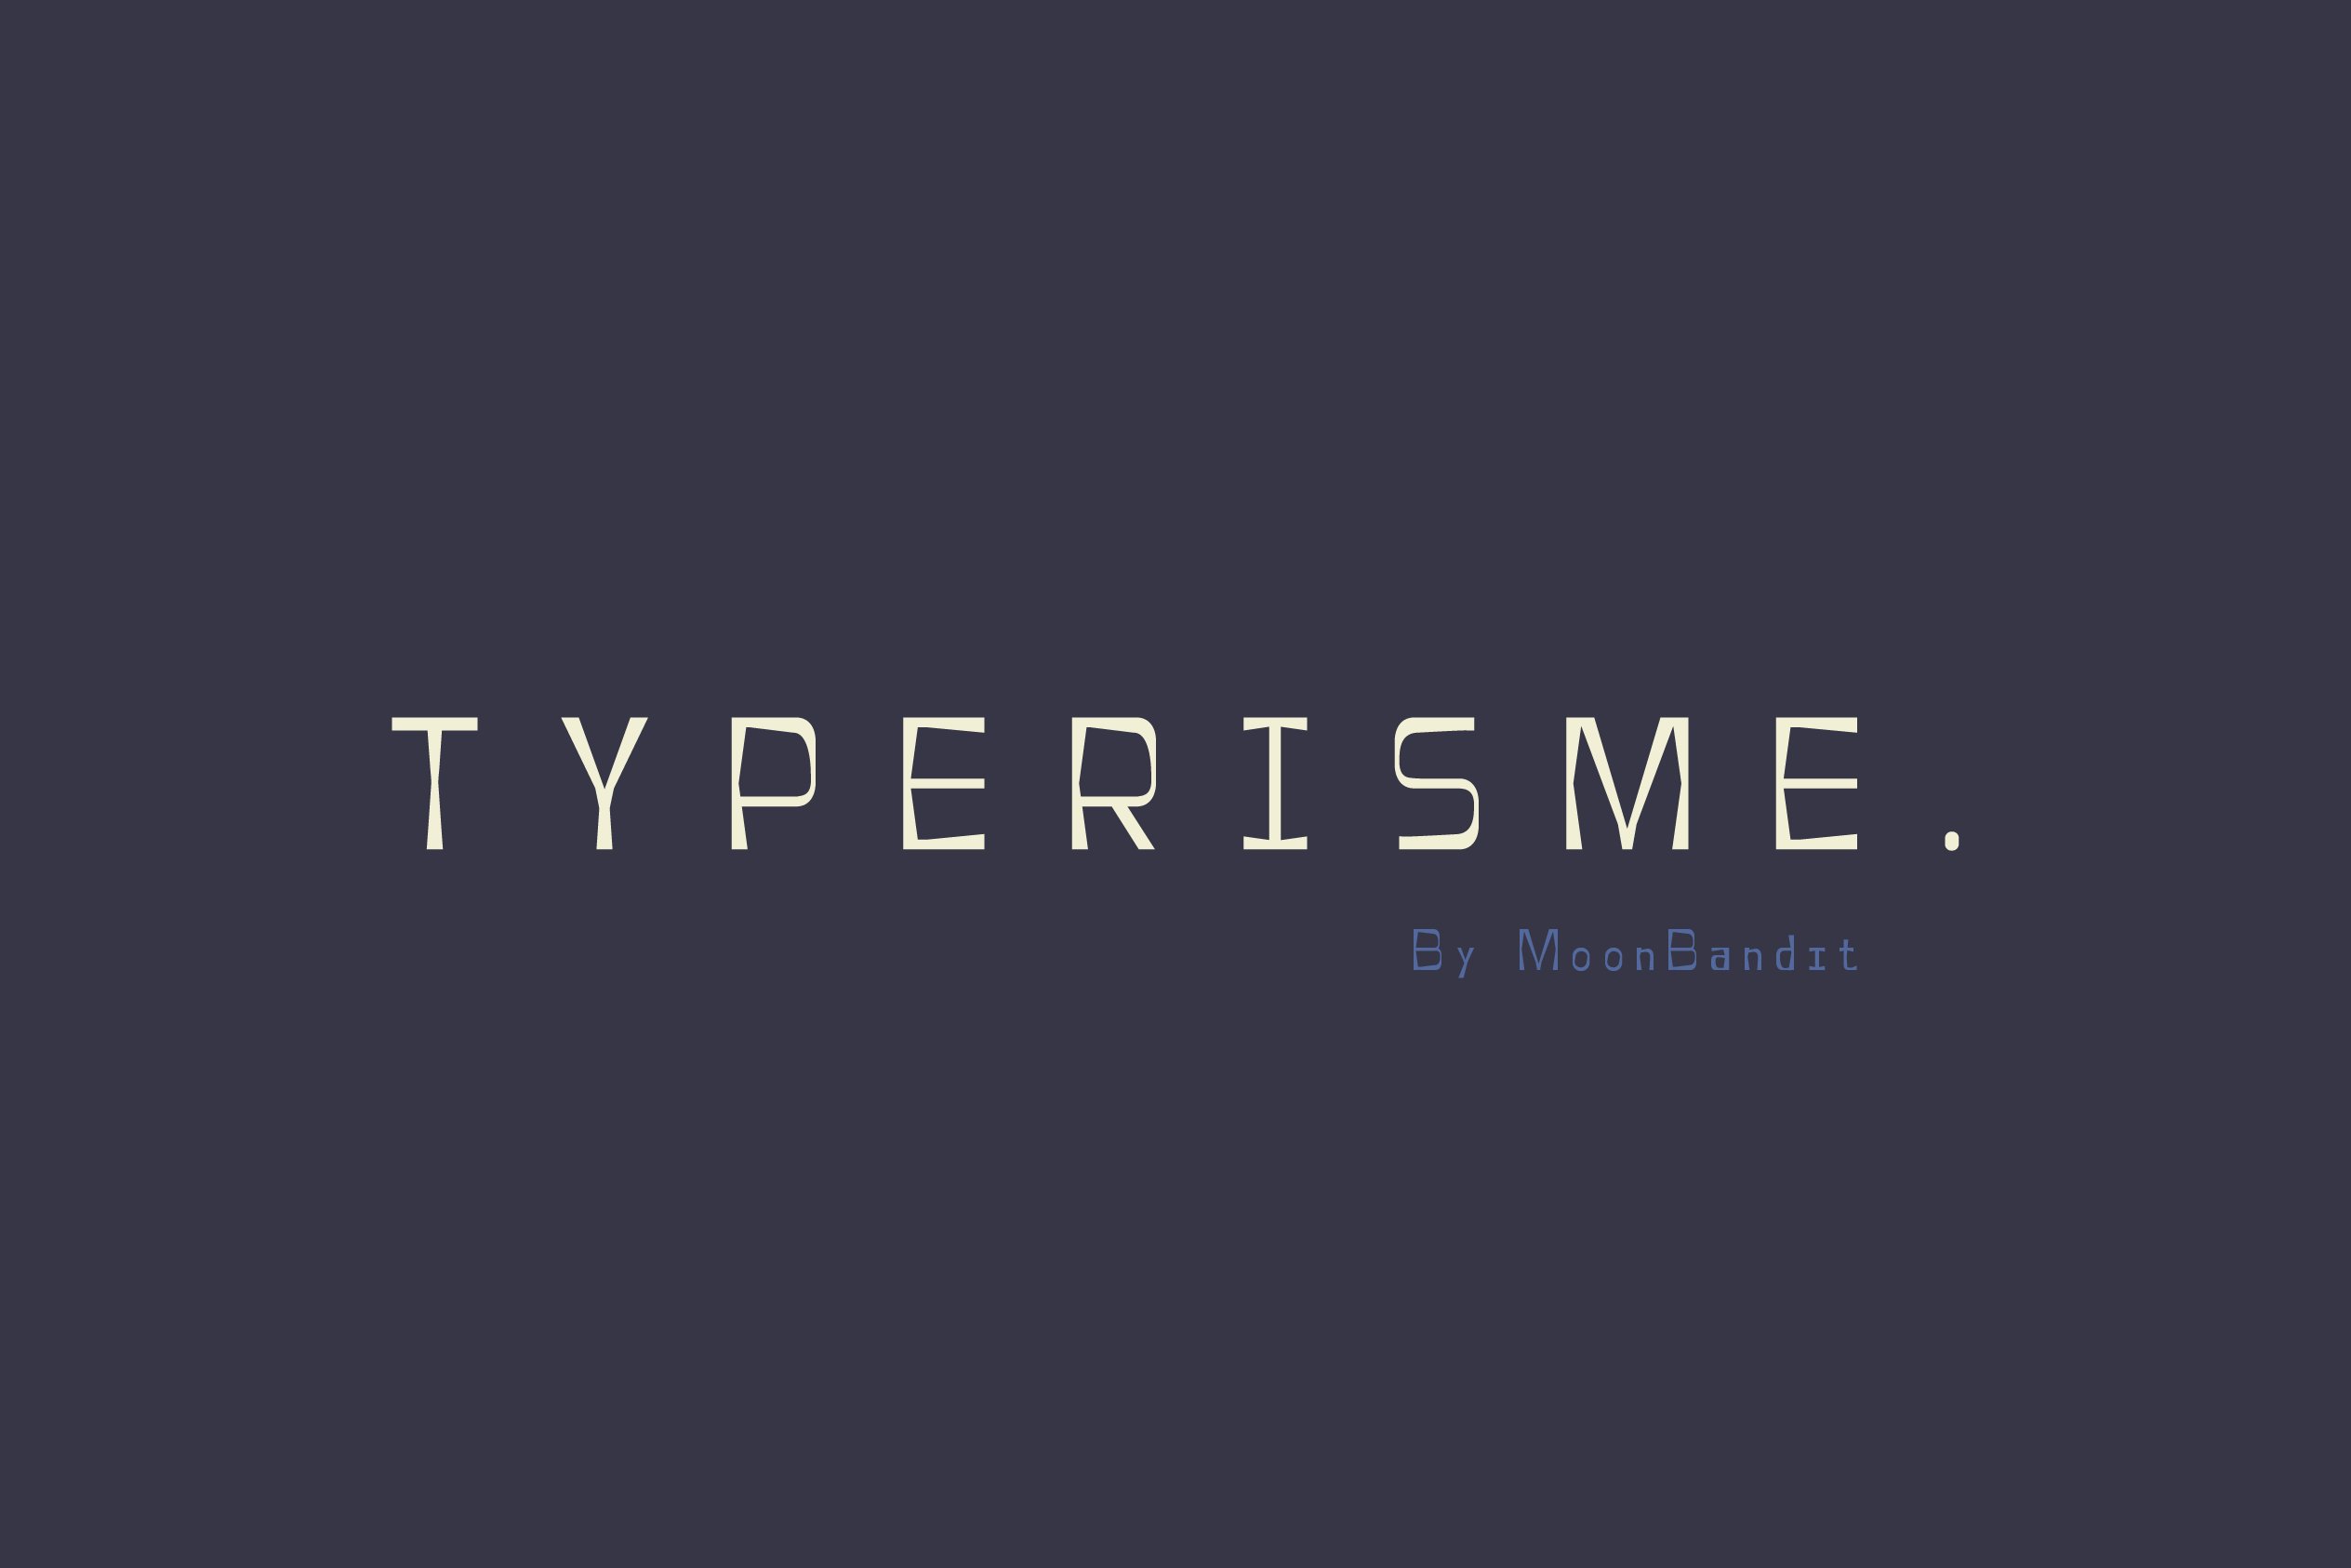 Typerisme - A modern typewriter font cover image.